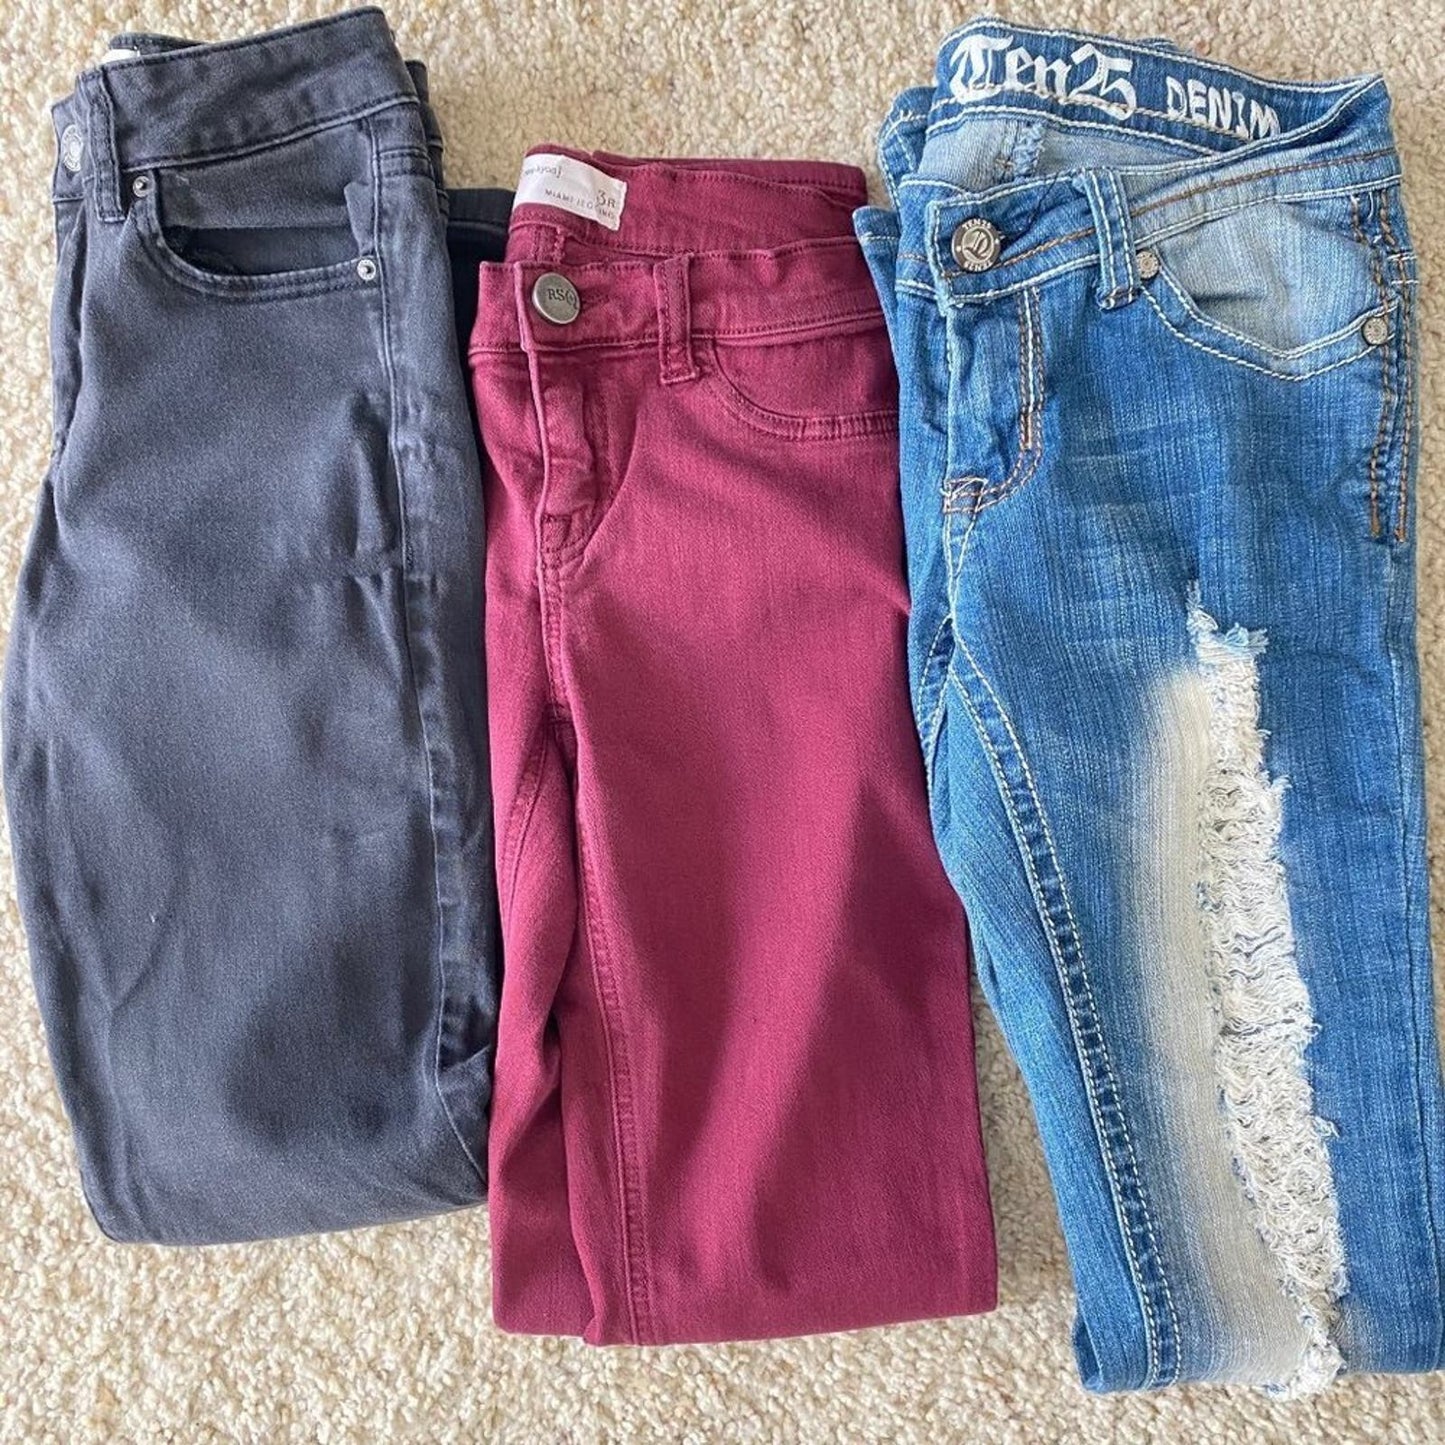 Garage/Res Kyoo/ ten25 sz 1 & 3 Junior jean lot bundle pants jeans